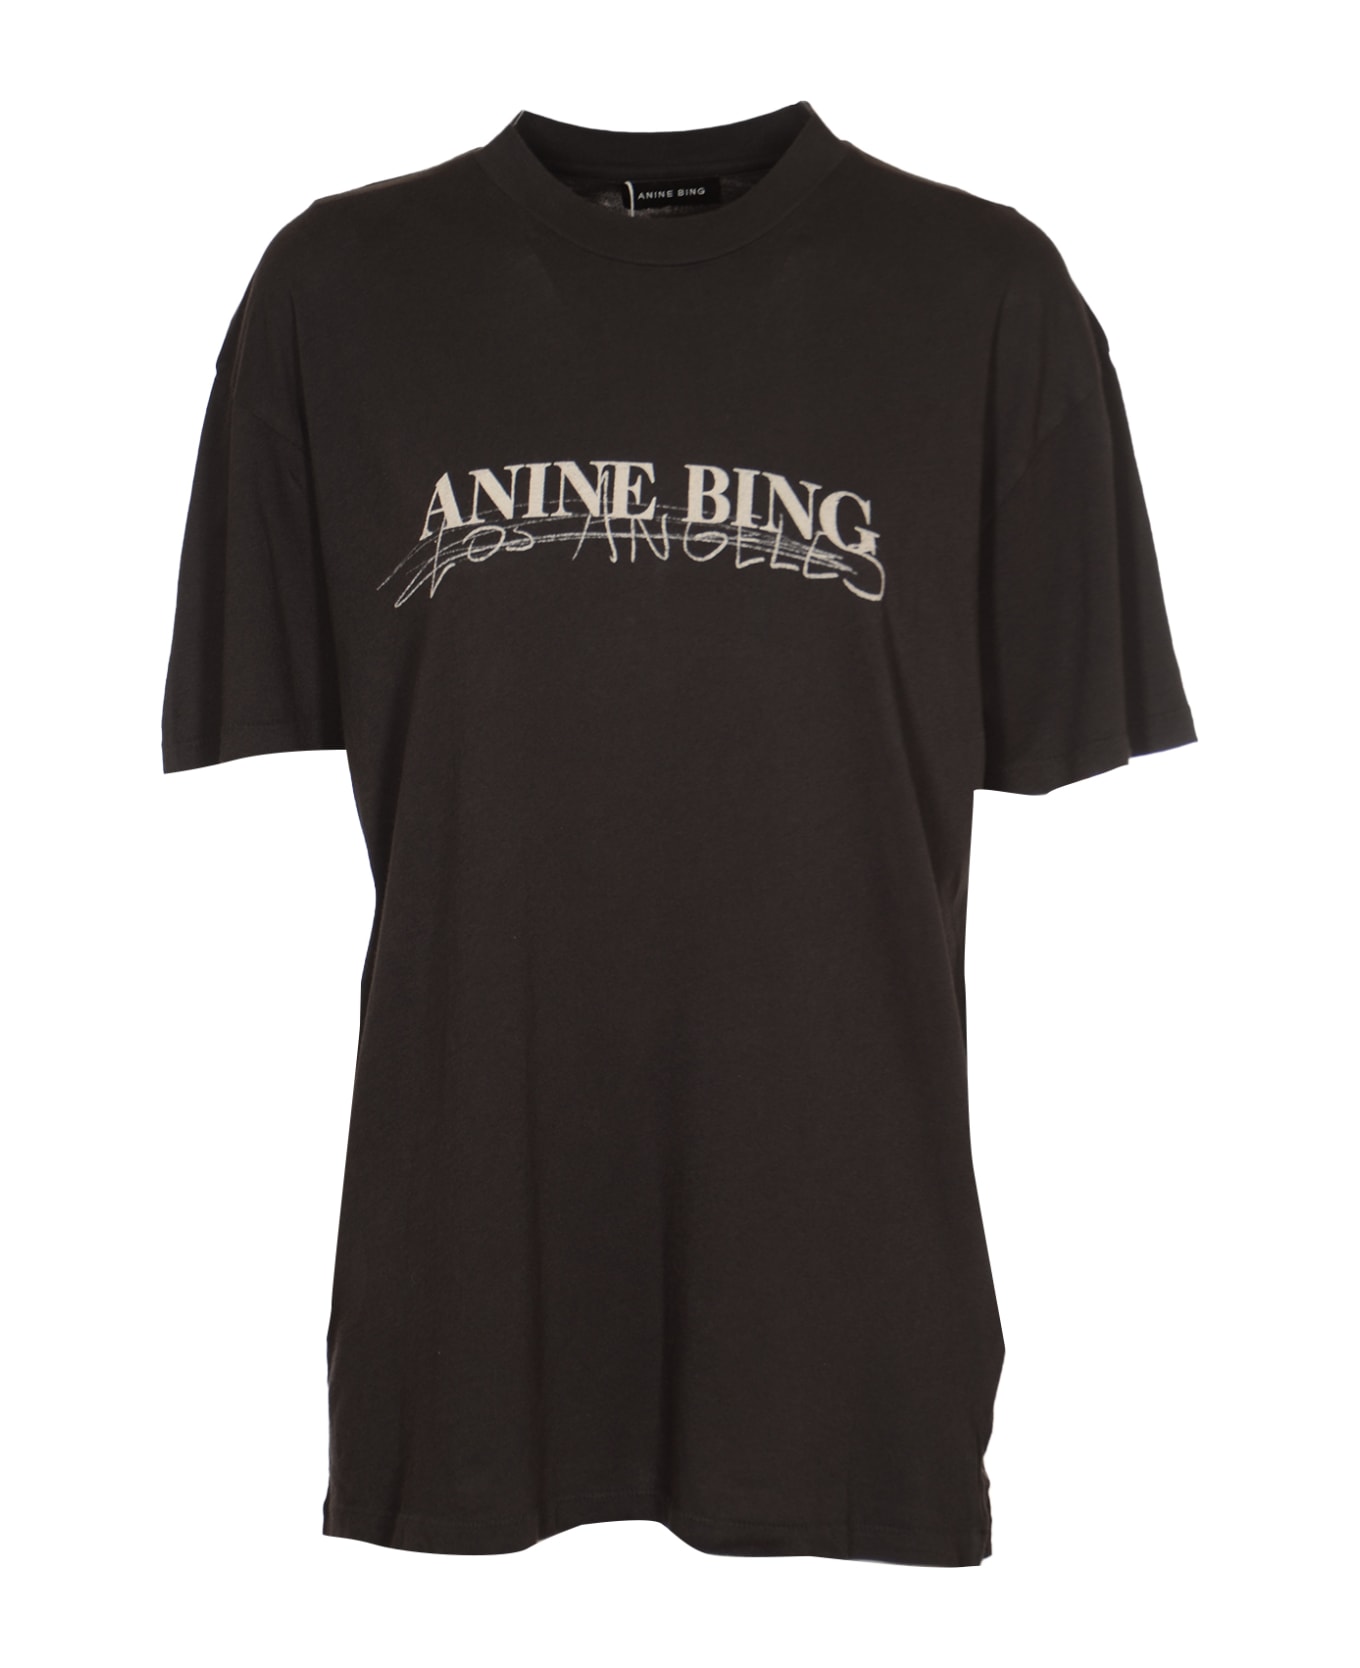 Anine Bing Printed T-shirt - Vintage Black